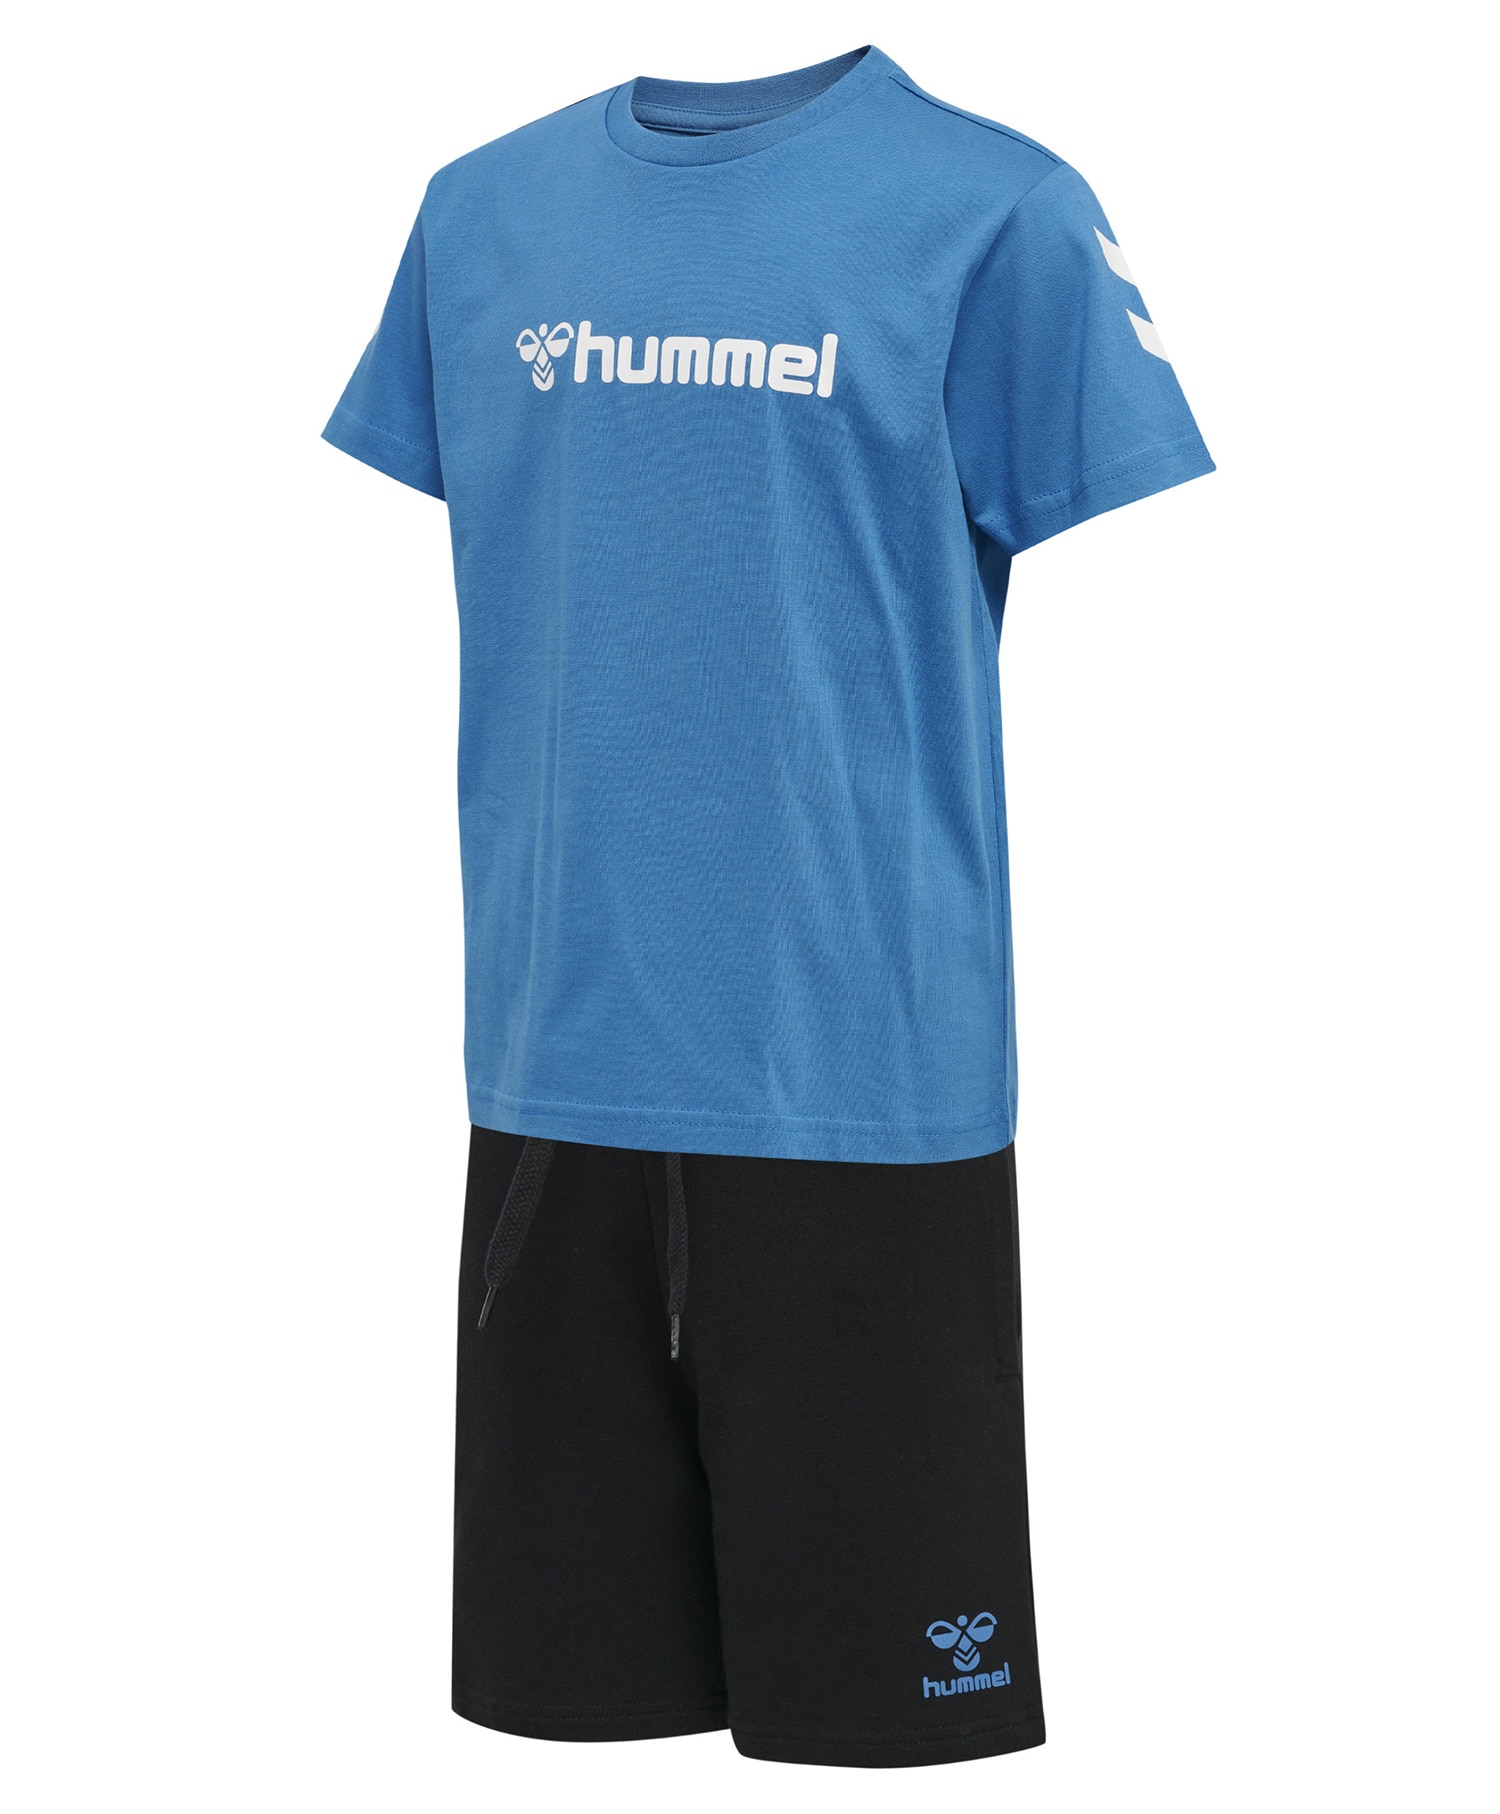 Hummel NOVET shorts set